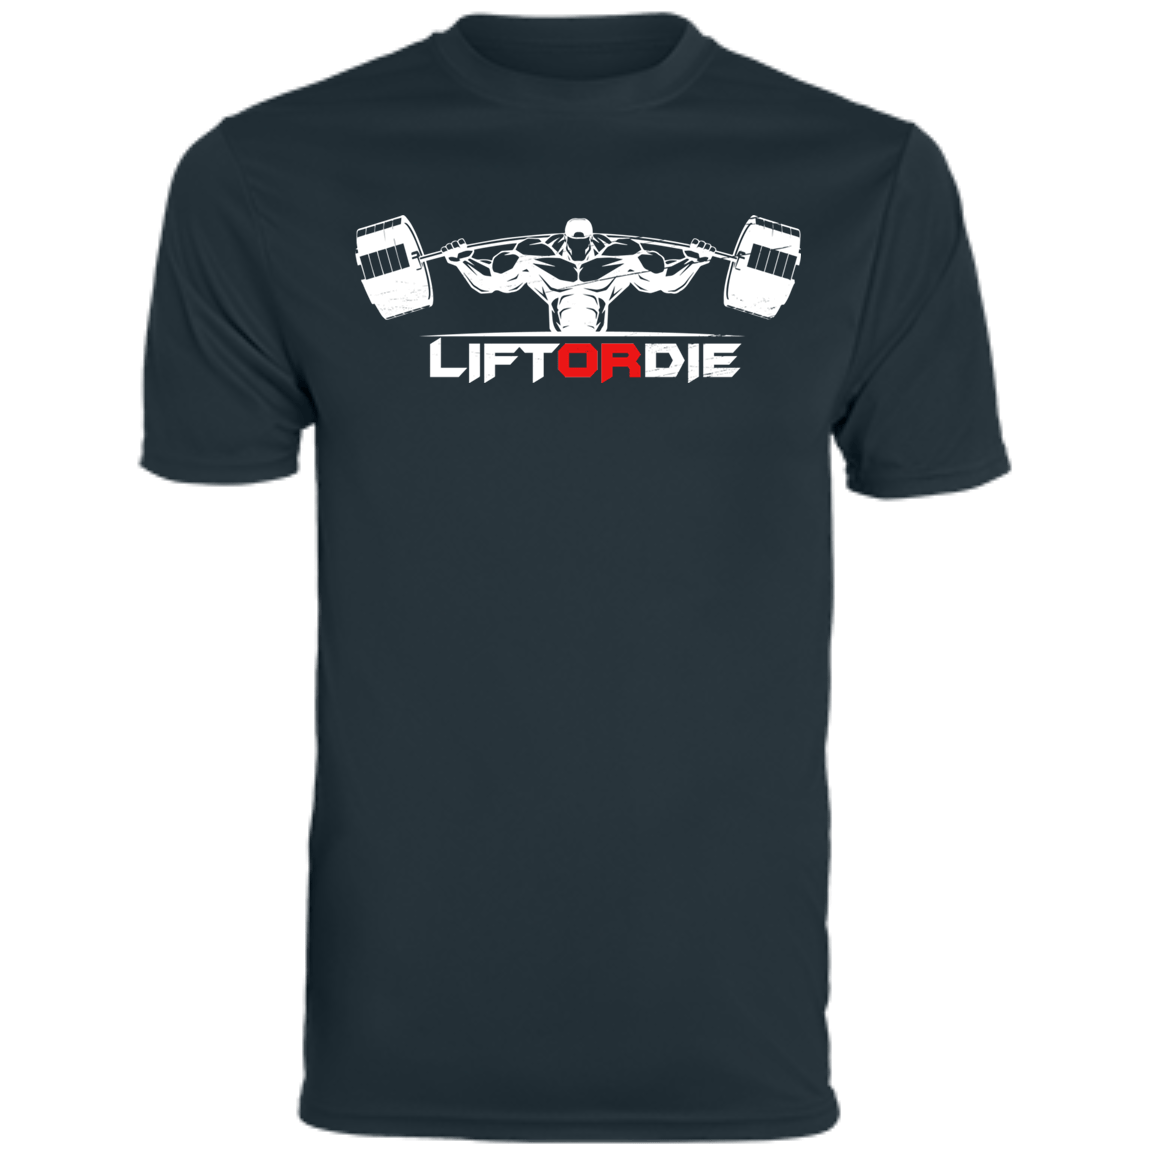 Lift or Die Men's Wicking T-Shirt